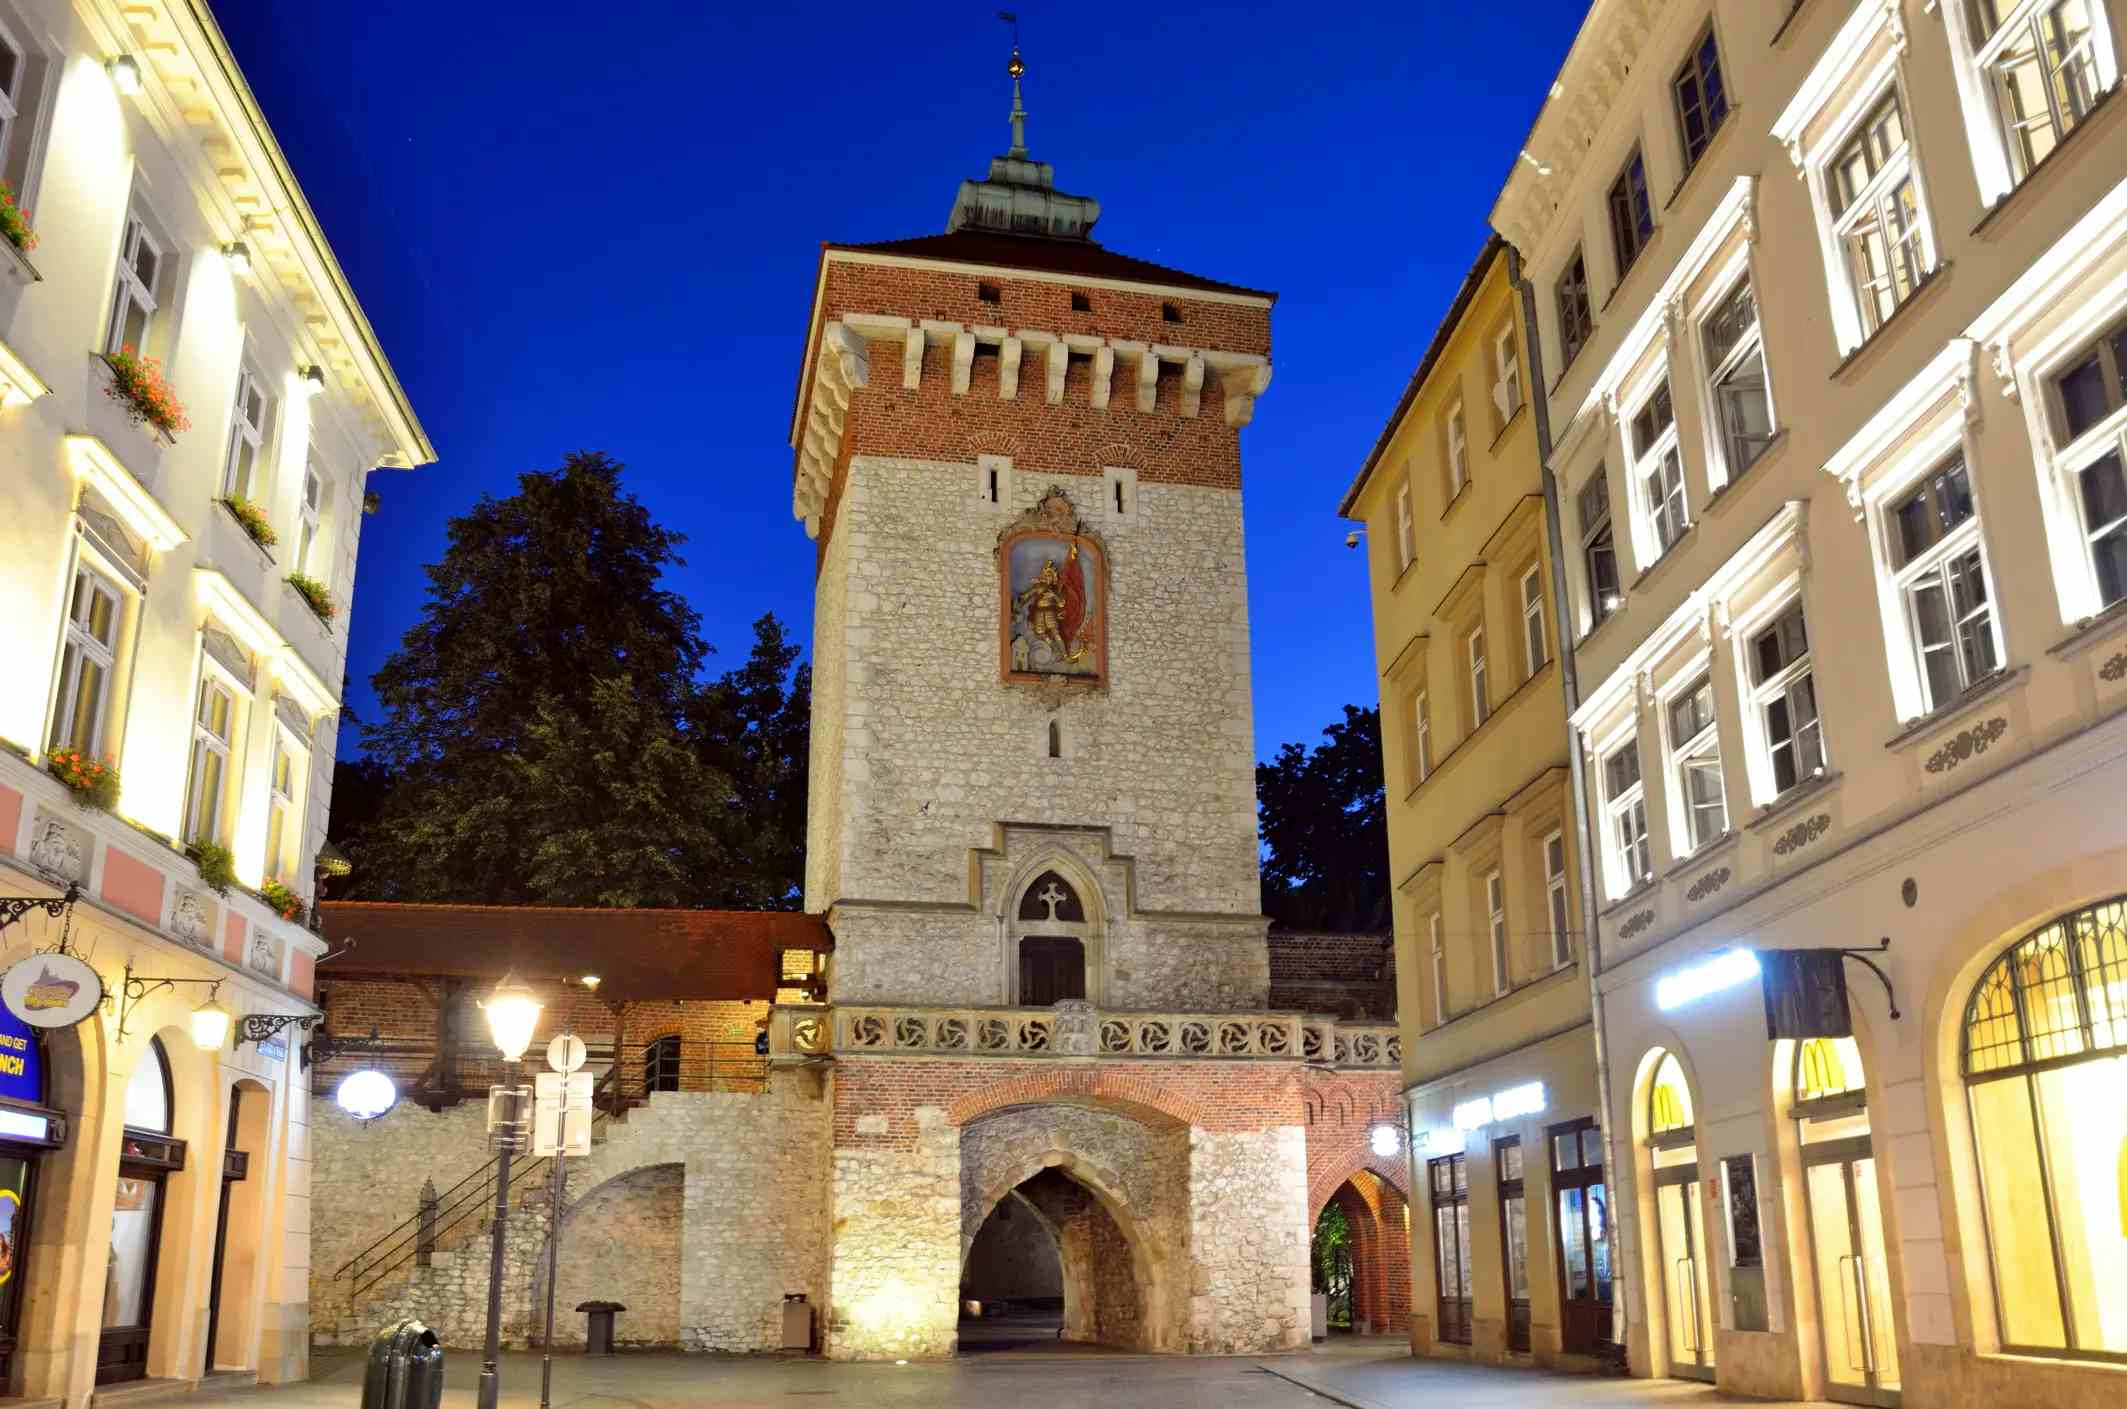 St. Florian's Gate image